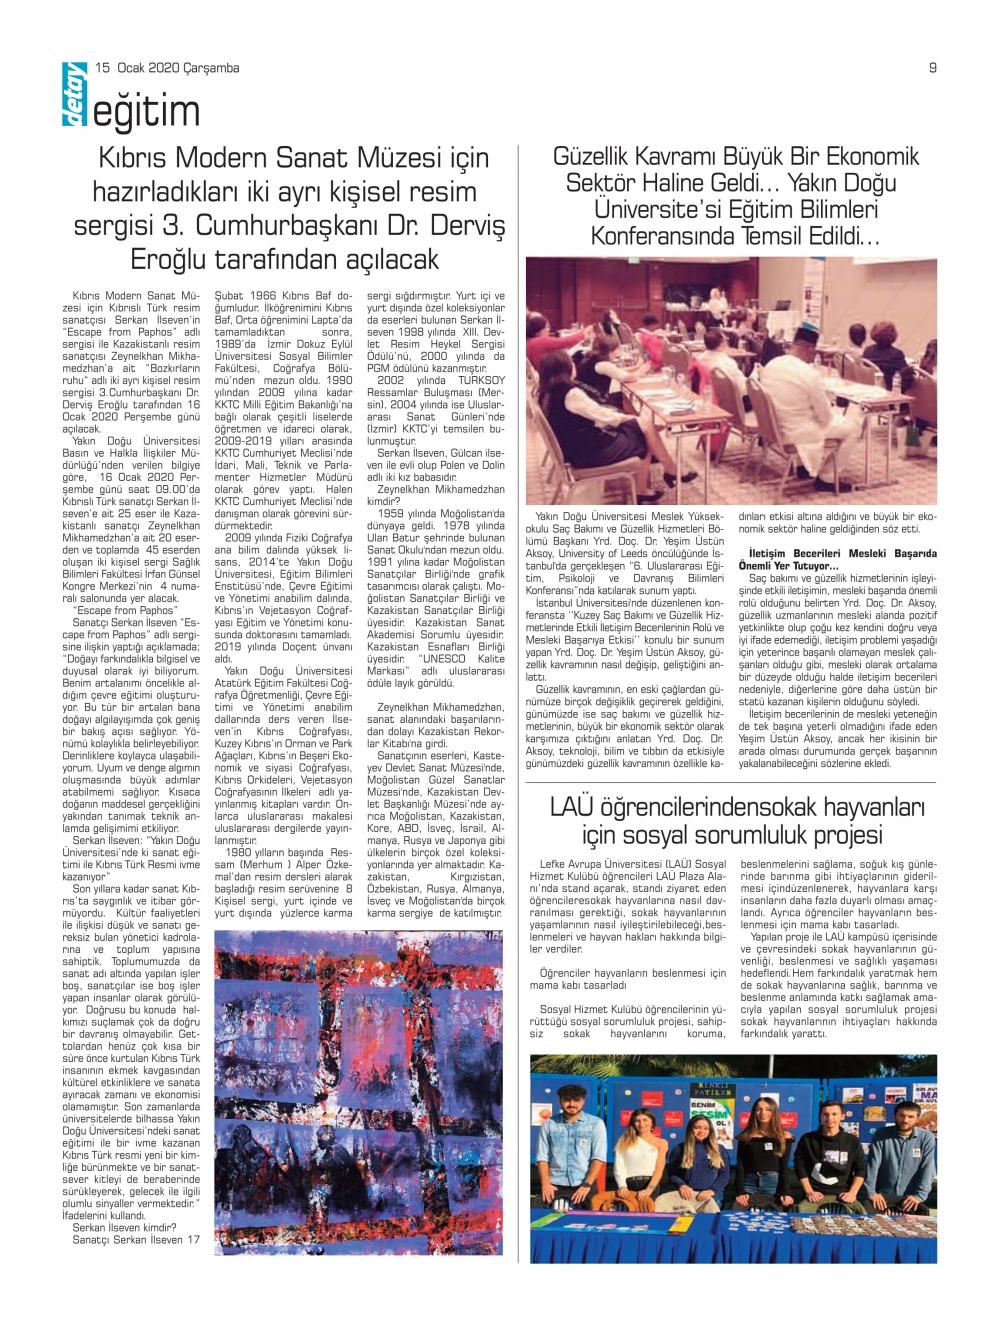 Detay Gazetes 15 Ocak 2020 galerisi resim 9